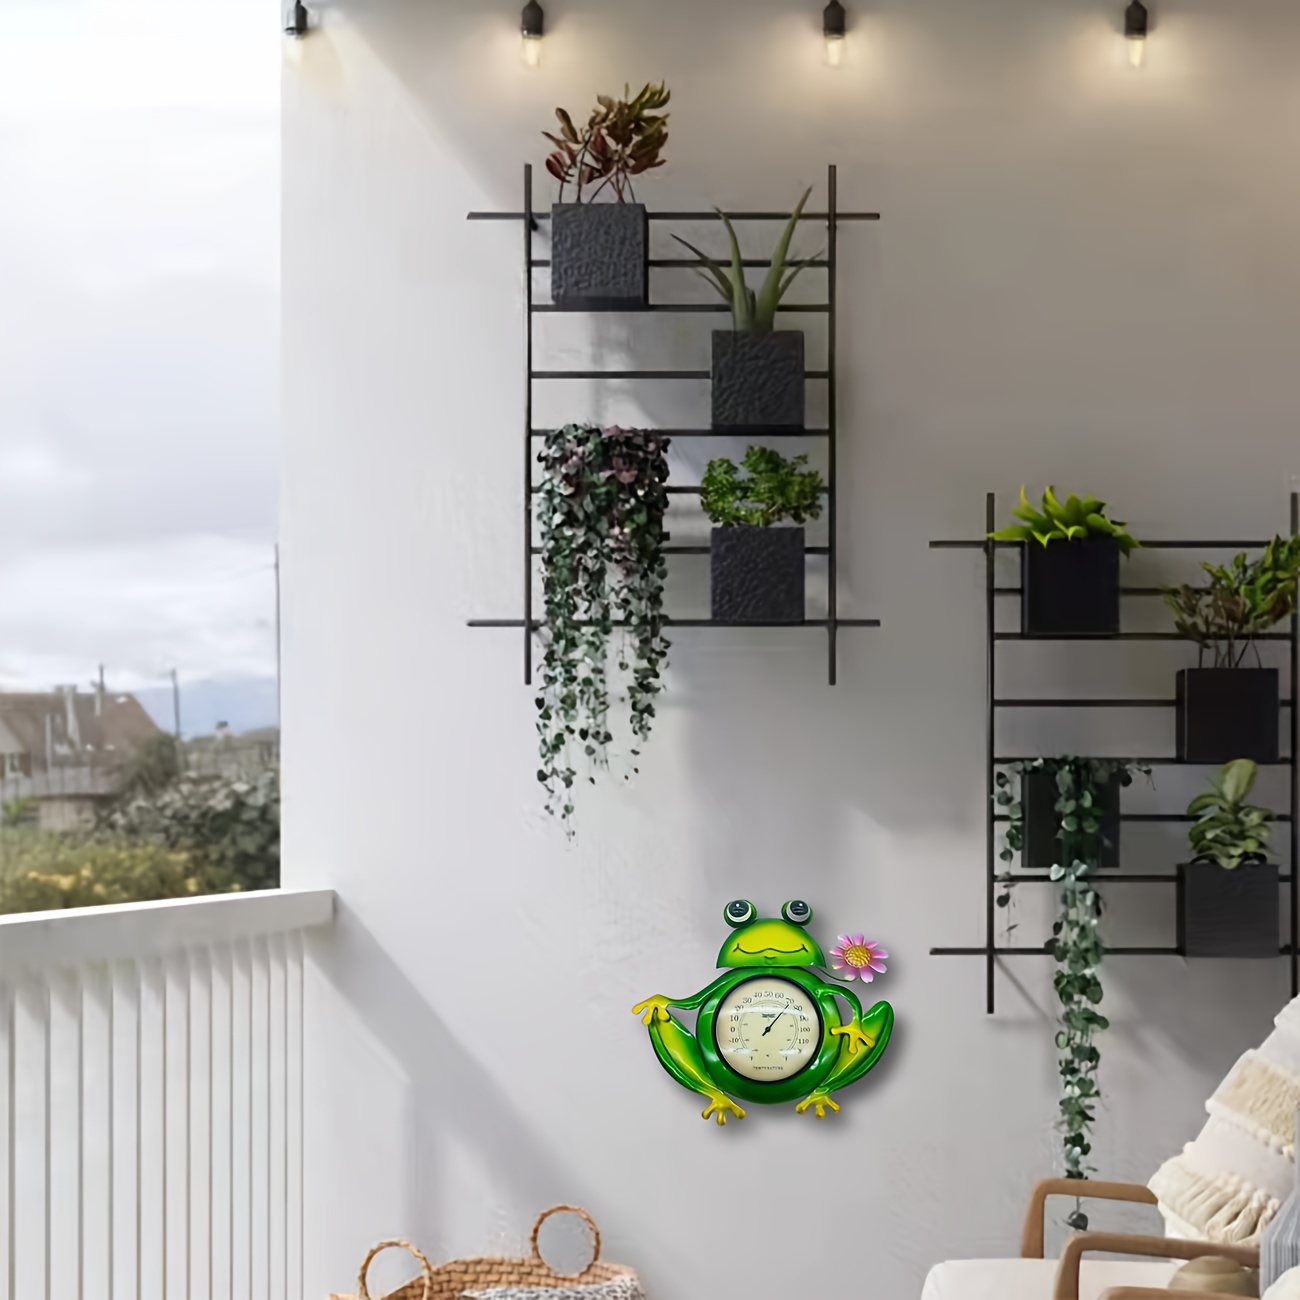 Termómetro de jardín - Termómetro para exteriores con diseño de bronce |  Termómetro de pared para visualización de temperatura al aire libre, pared